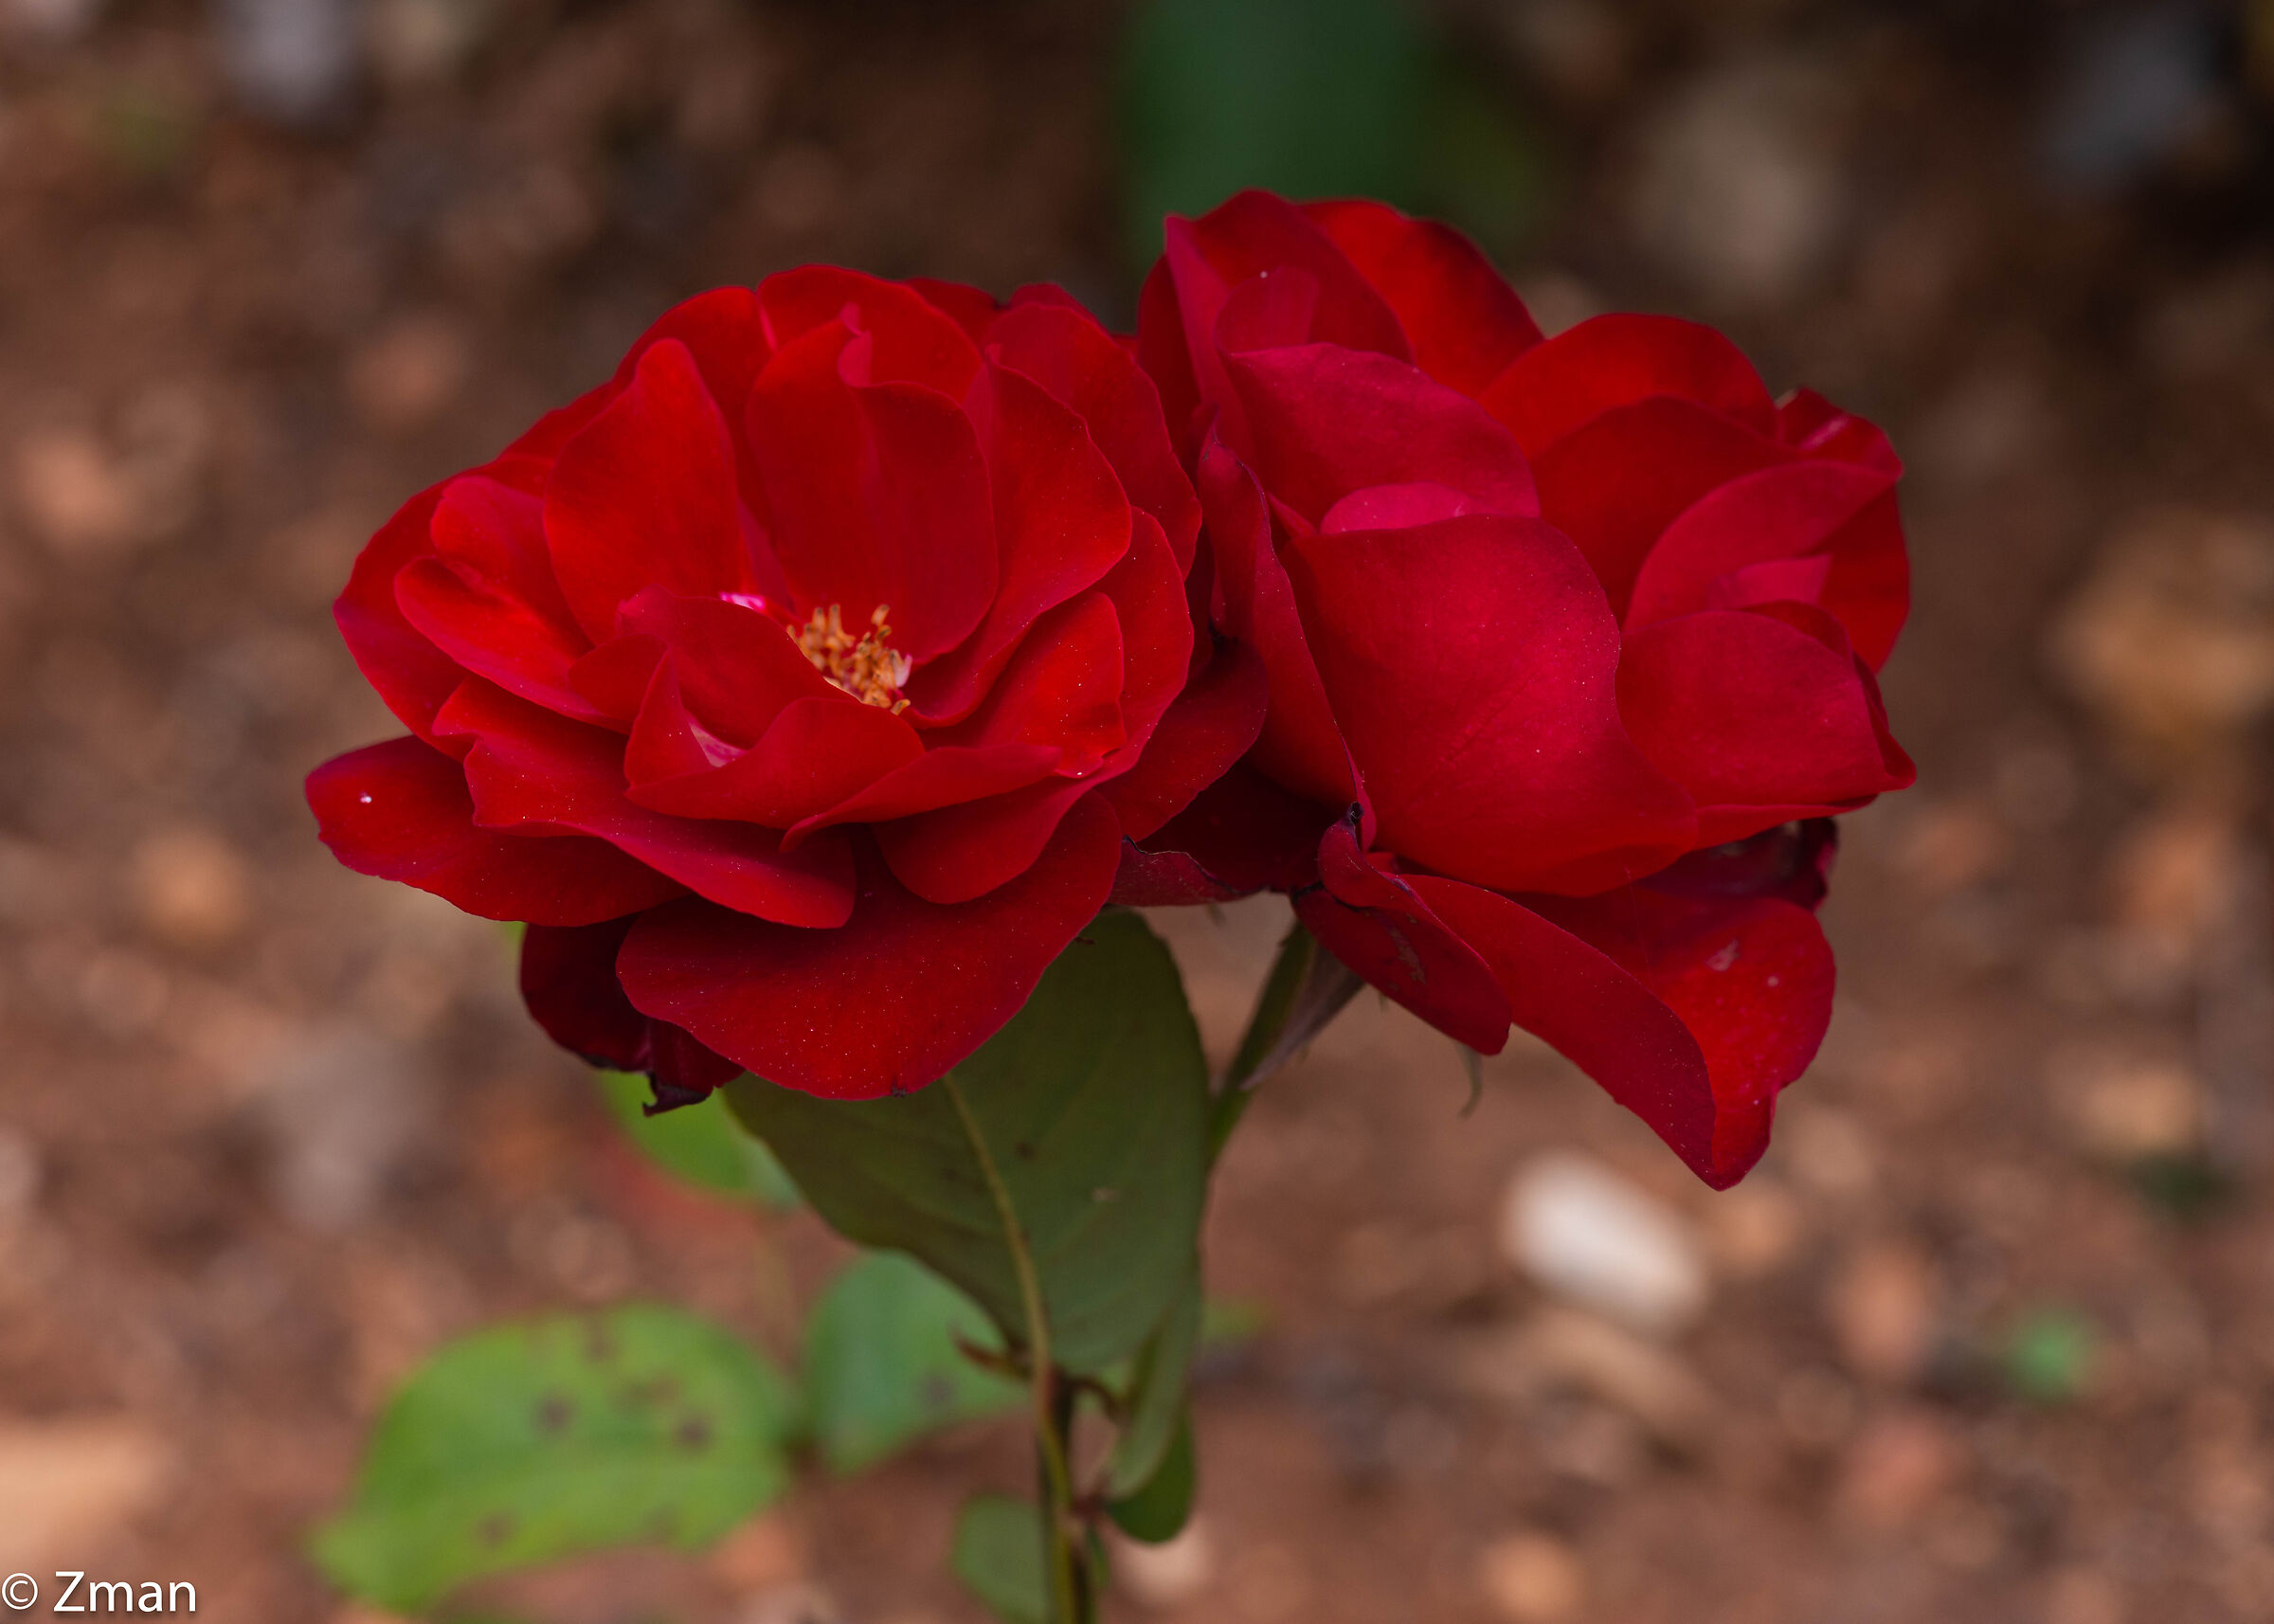 Royal Red Roses...